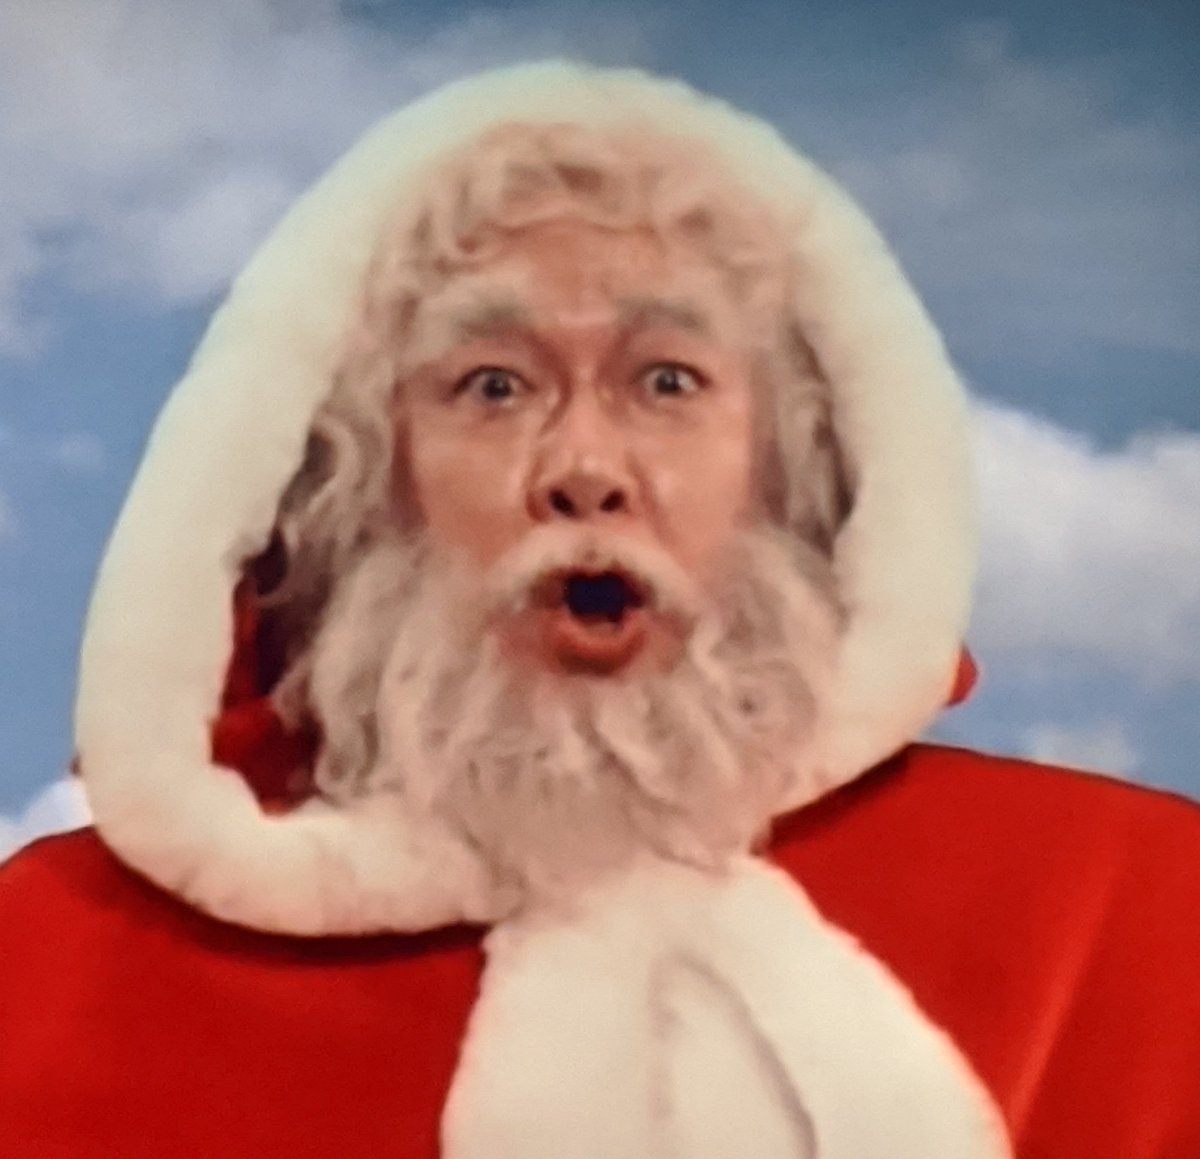 Mr. Miyagi was Santa Claus all along! WHO WOULD HAVE GUESSED  #BabesInToyland